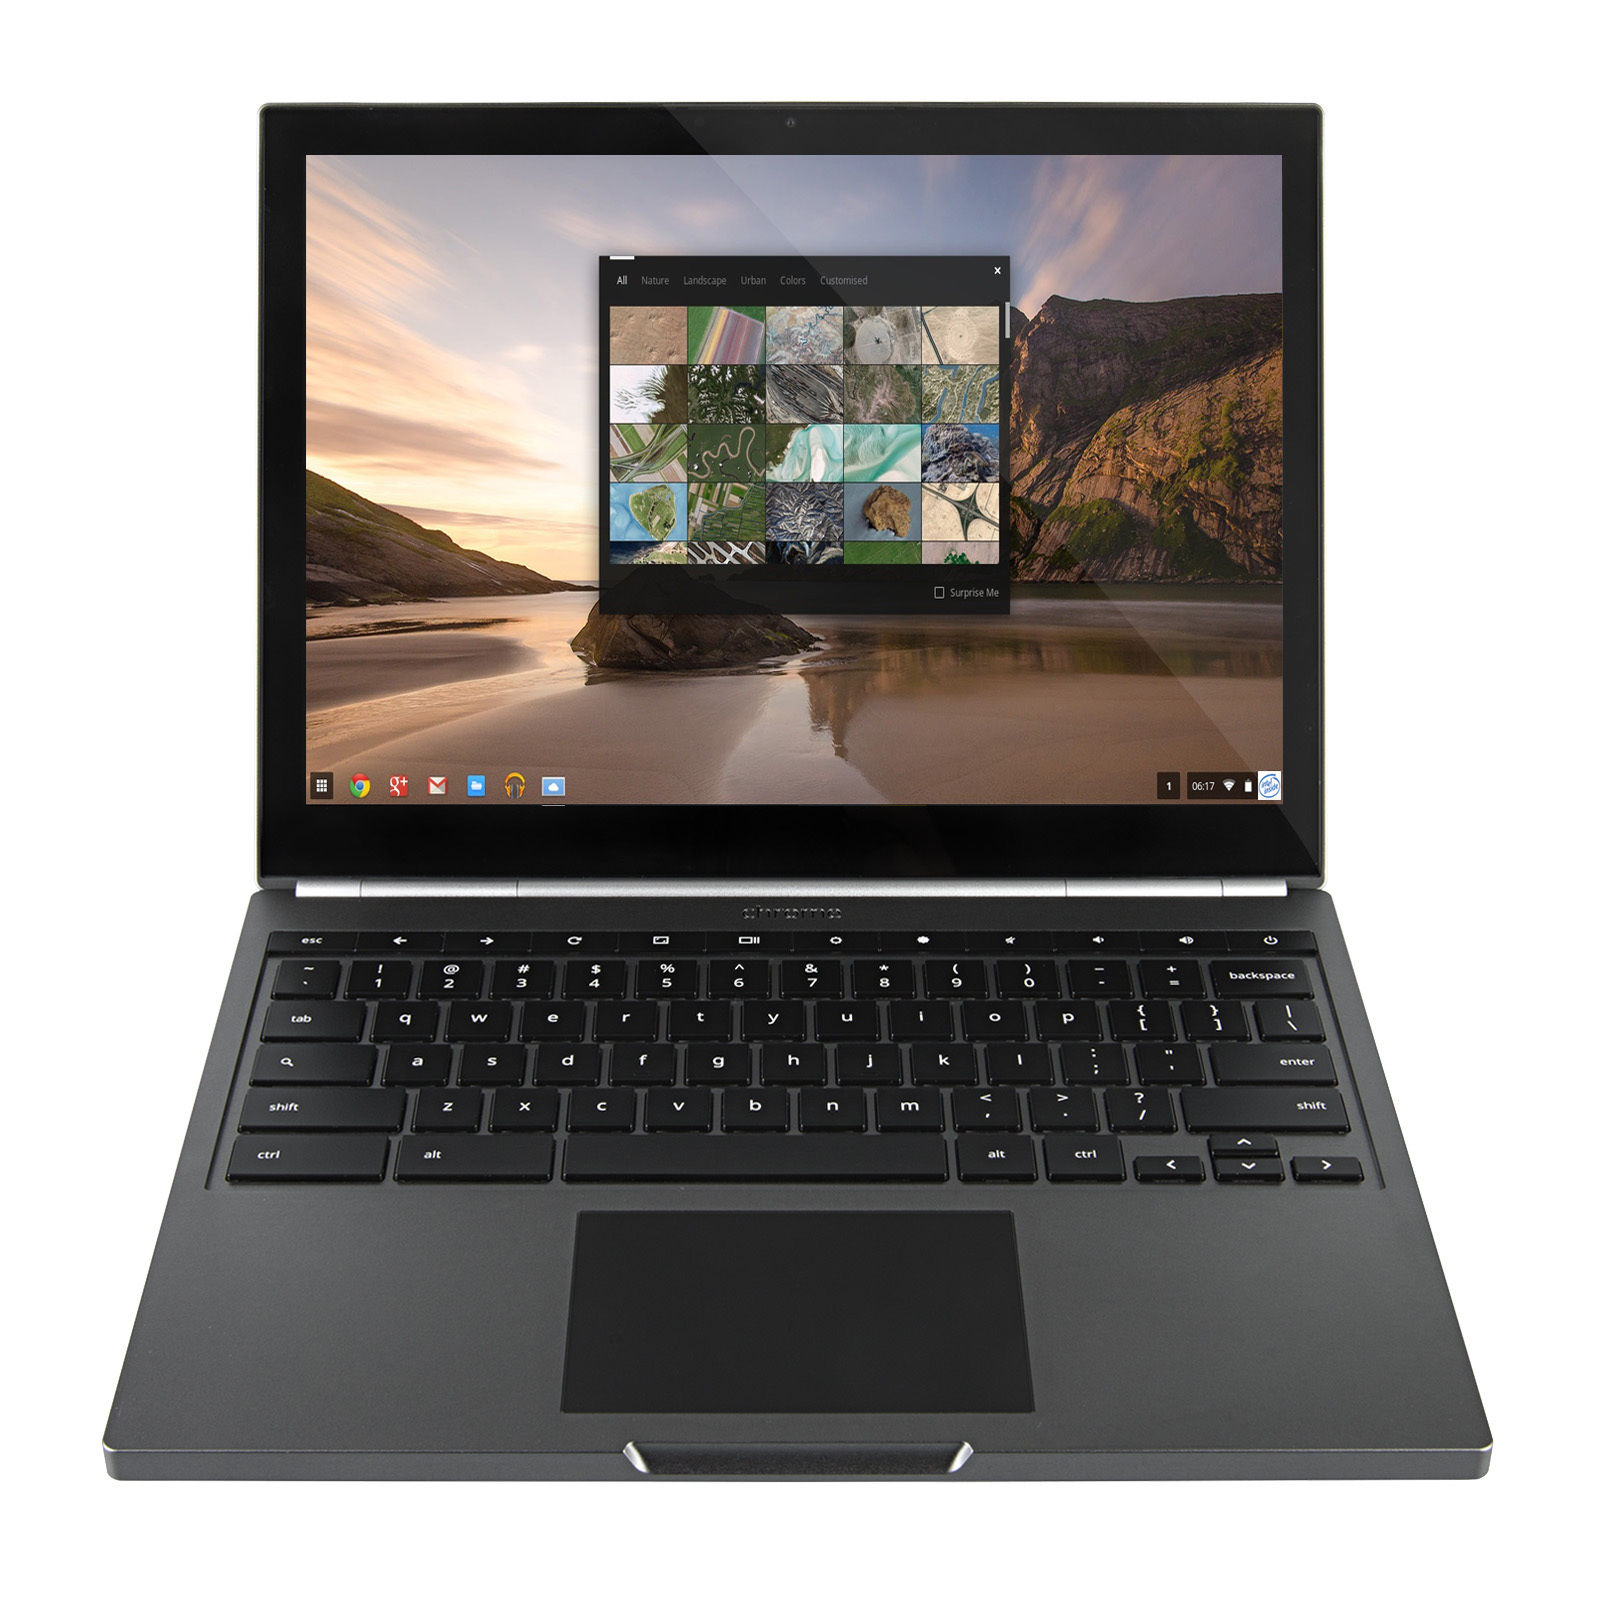 Google Chromebook Pixel 64GB LTE laptop for $380